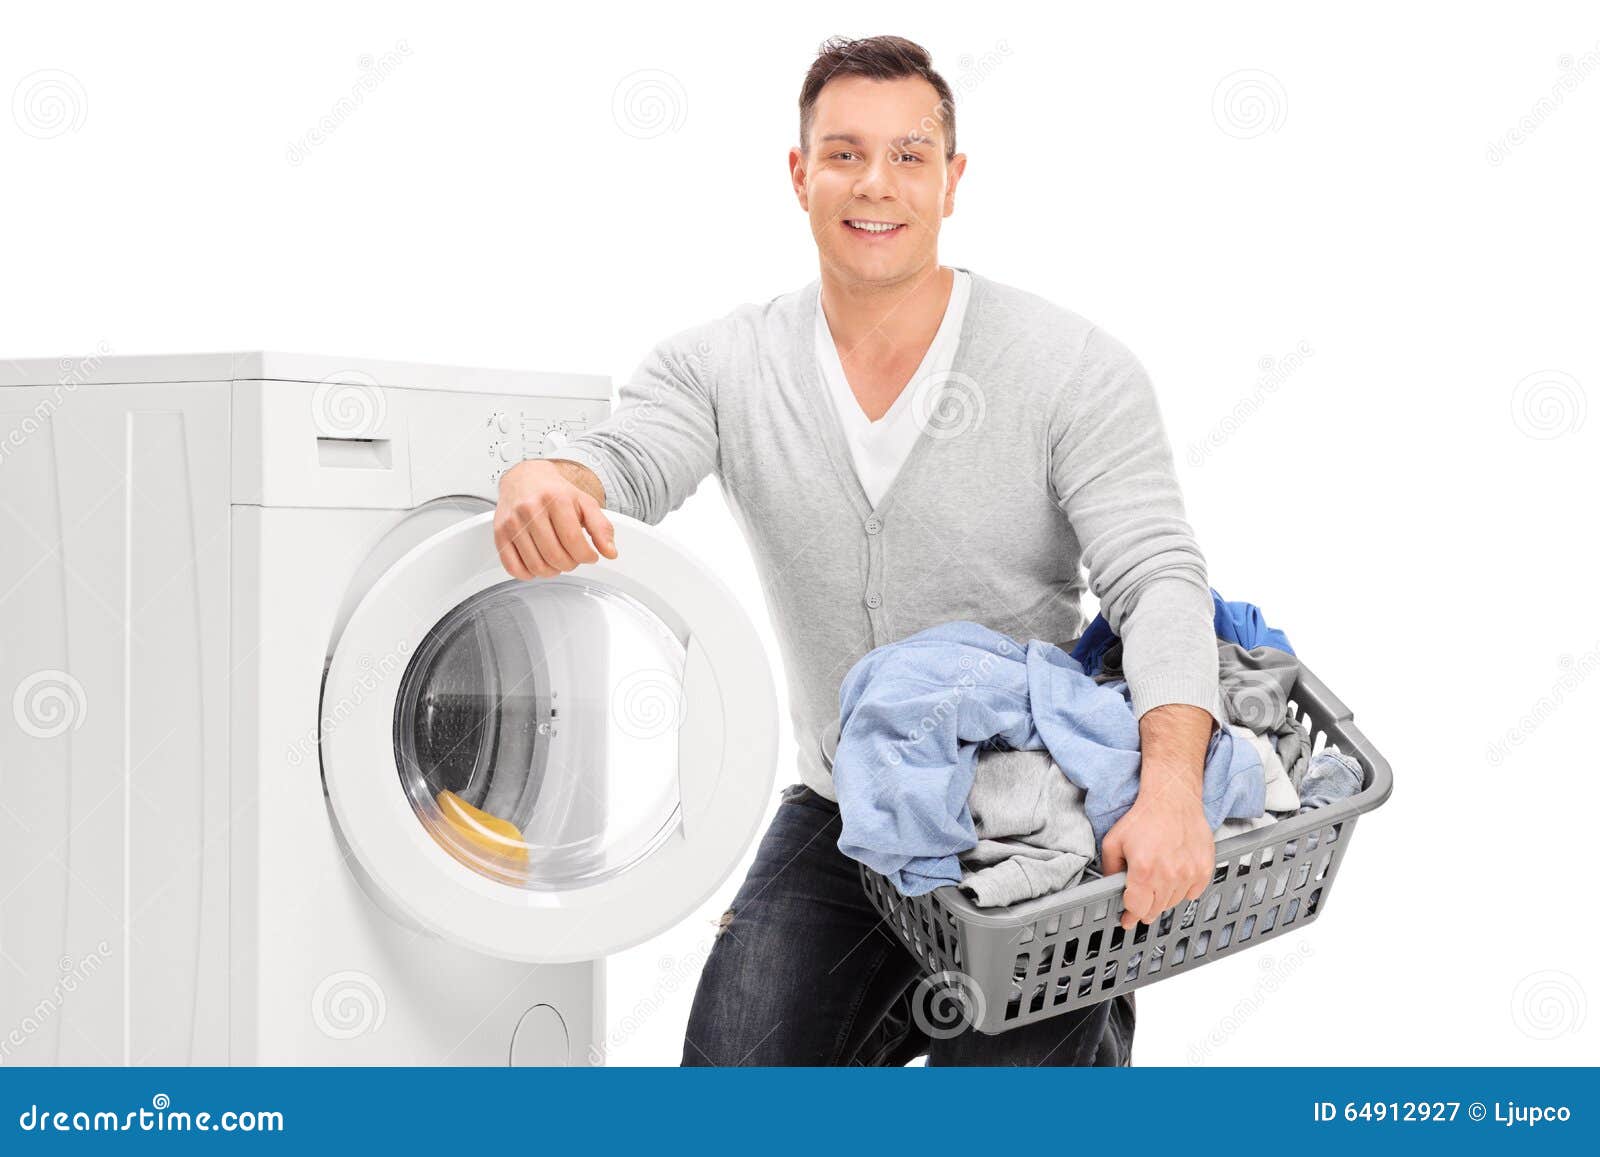 Did the laundry. Мужчина и стиральная машина. Мужик и стиралка. Стирка мужской. Стиральная машина стирает мужчина.